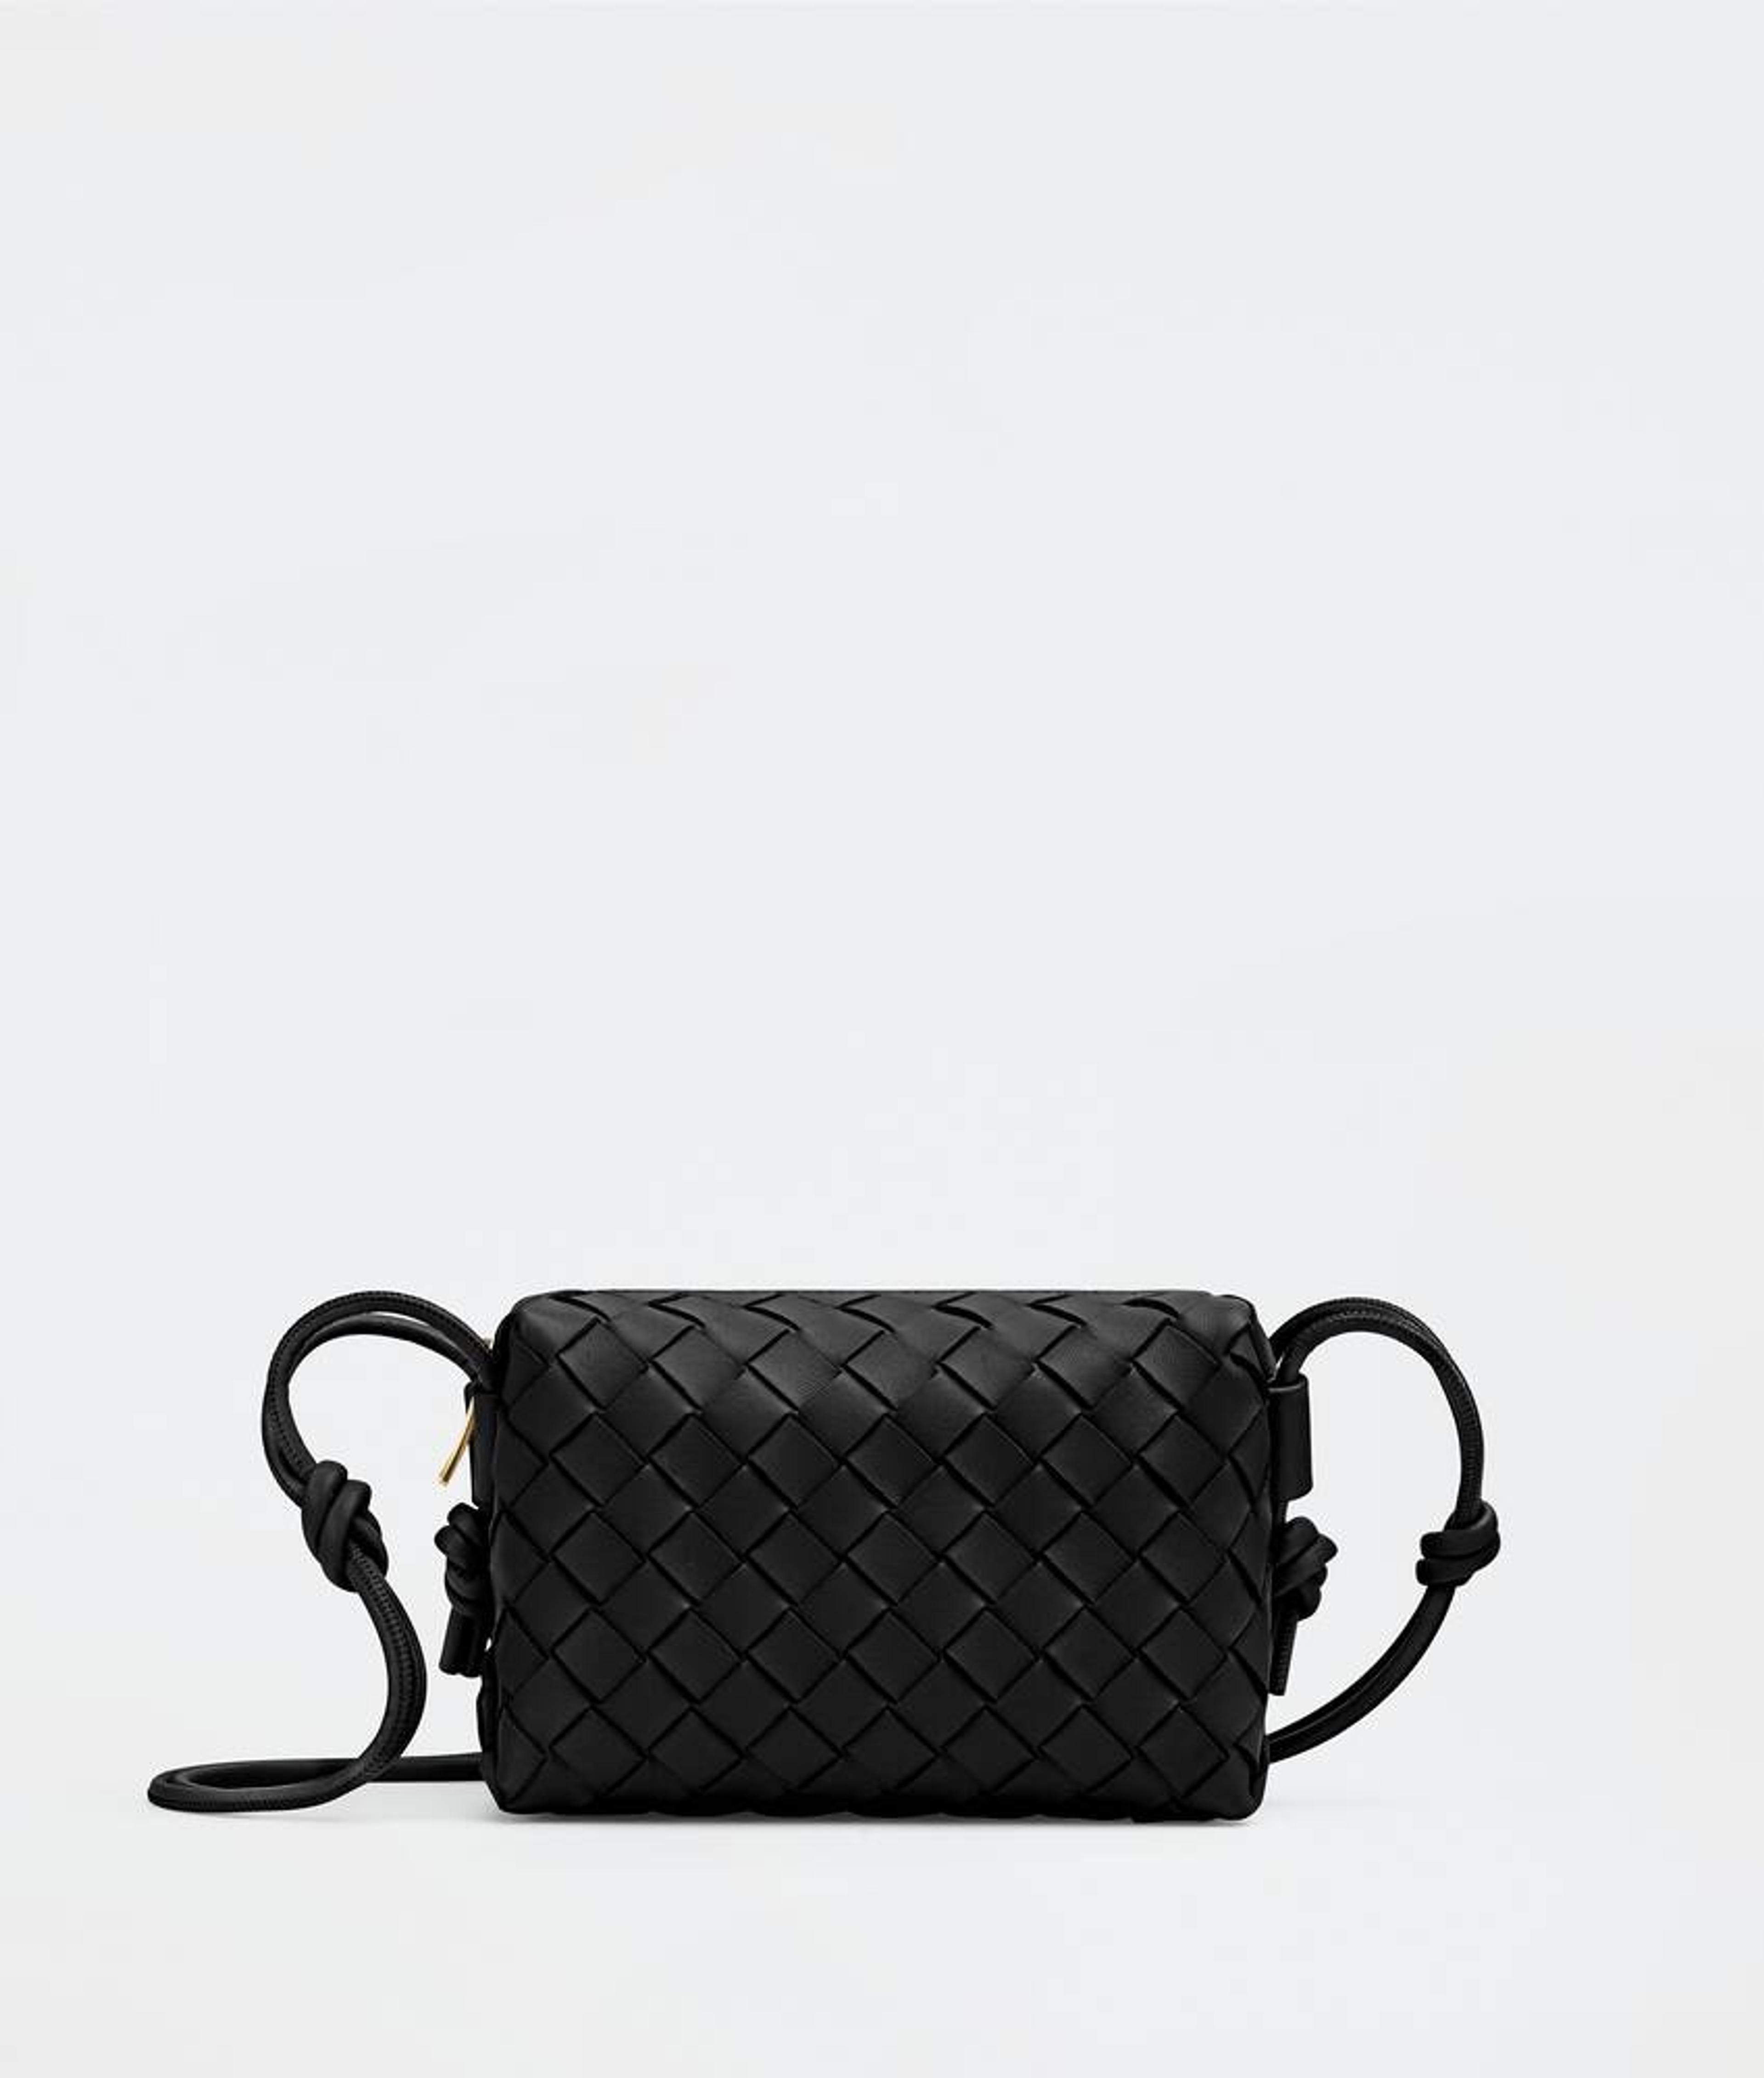 Bottega Veneta® Women's Mini Loop Camera Bag in Black. Shop online now.